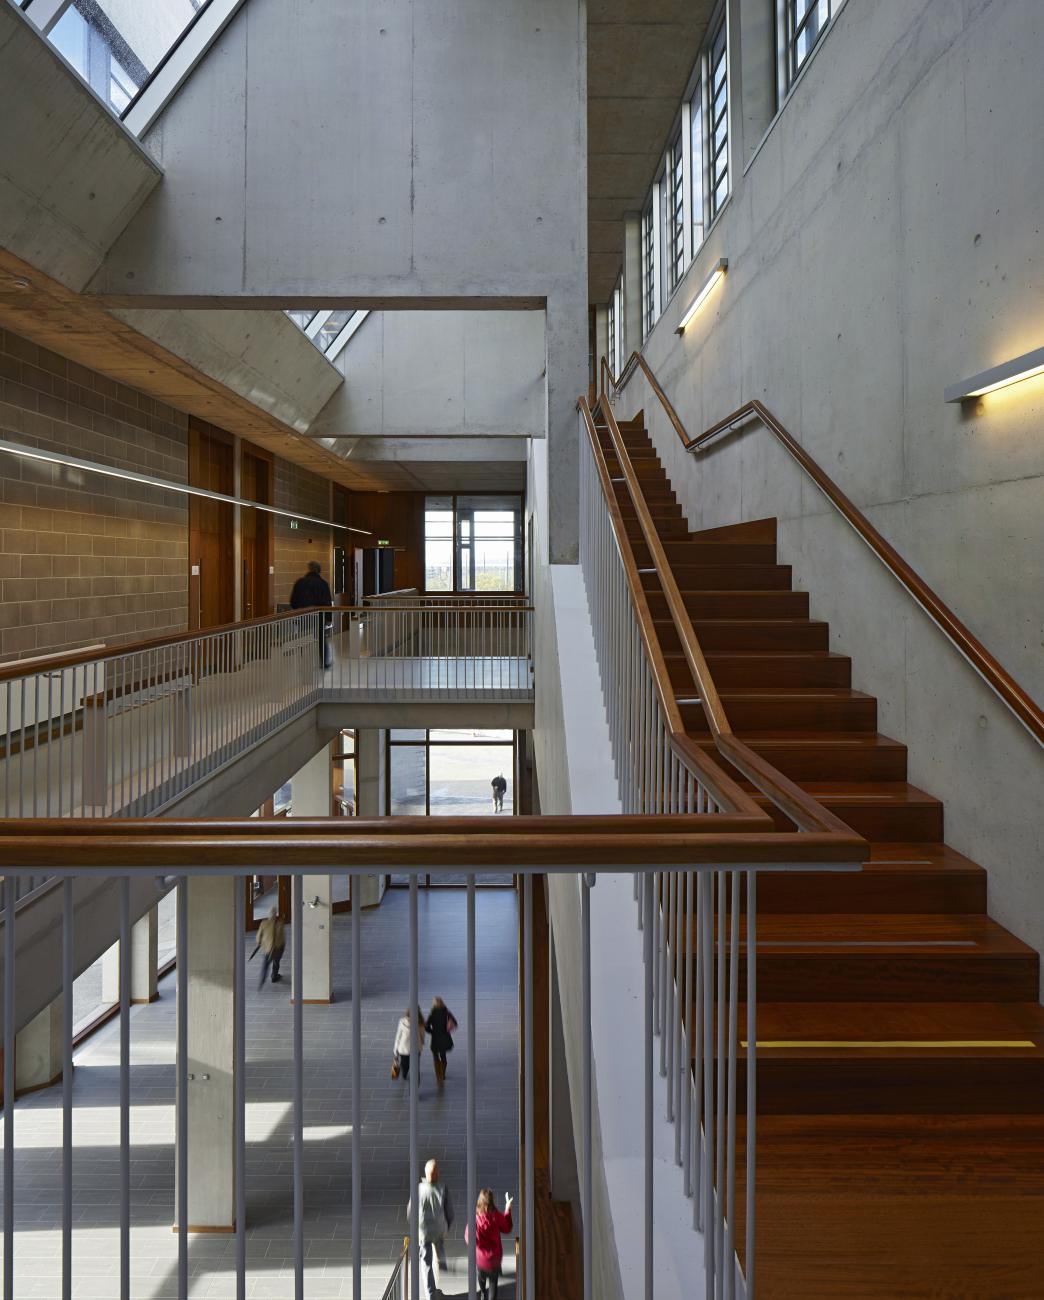 Yvonne Farrell and Shelley McNamara | The Pritzker Architecture Prize